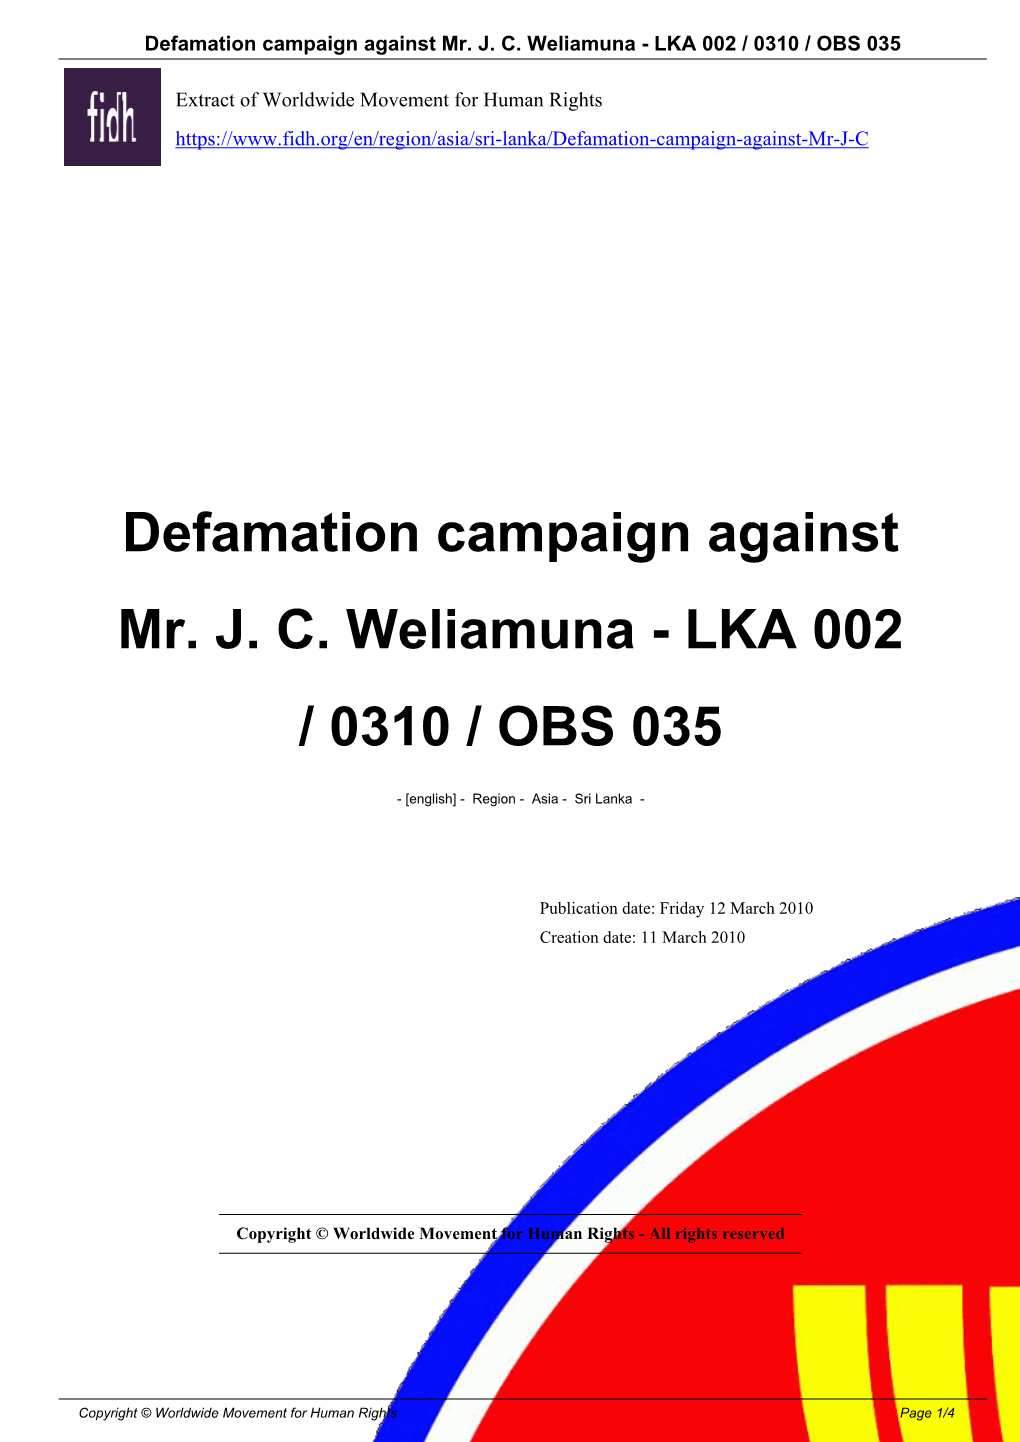 Defamation Campaign Against Mr. JC Weliamuna